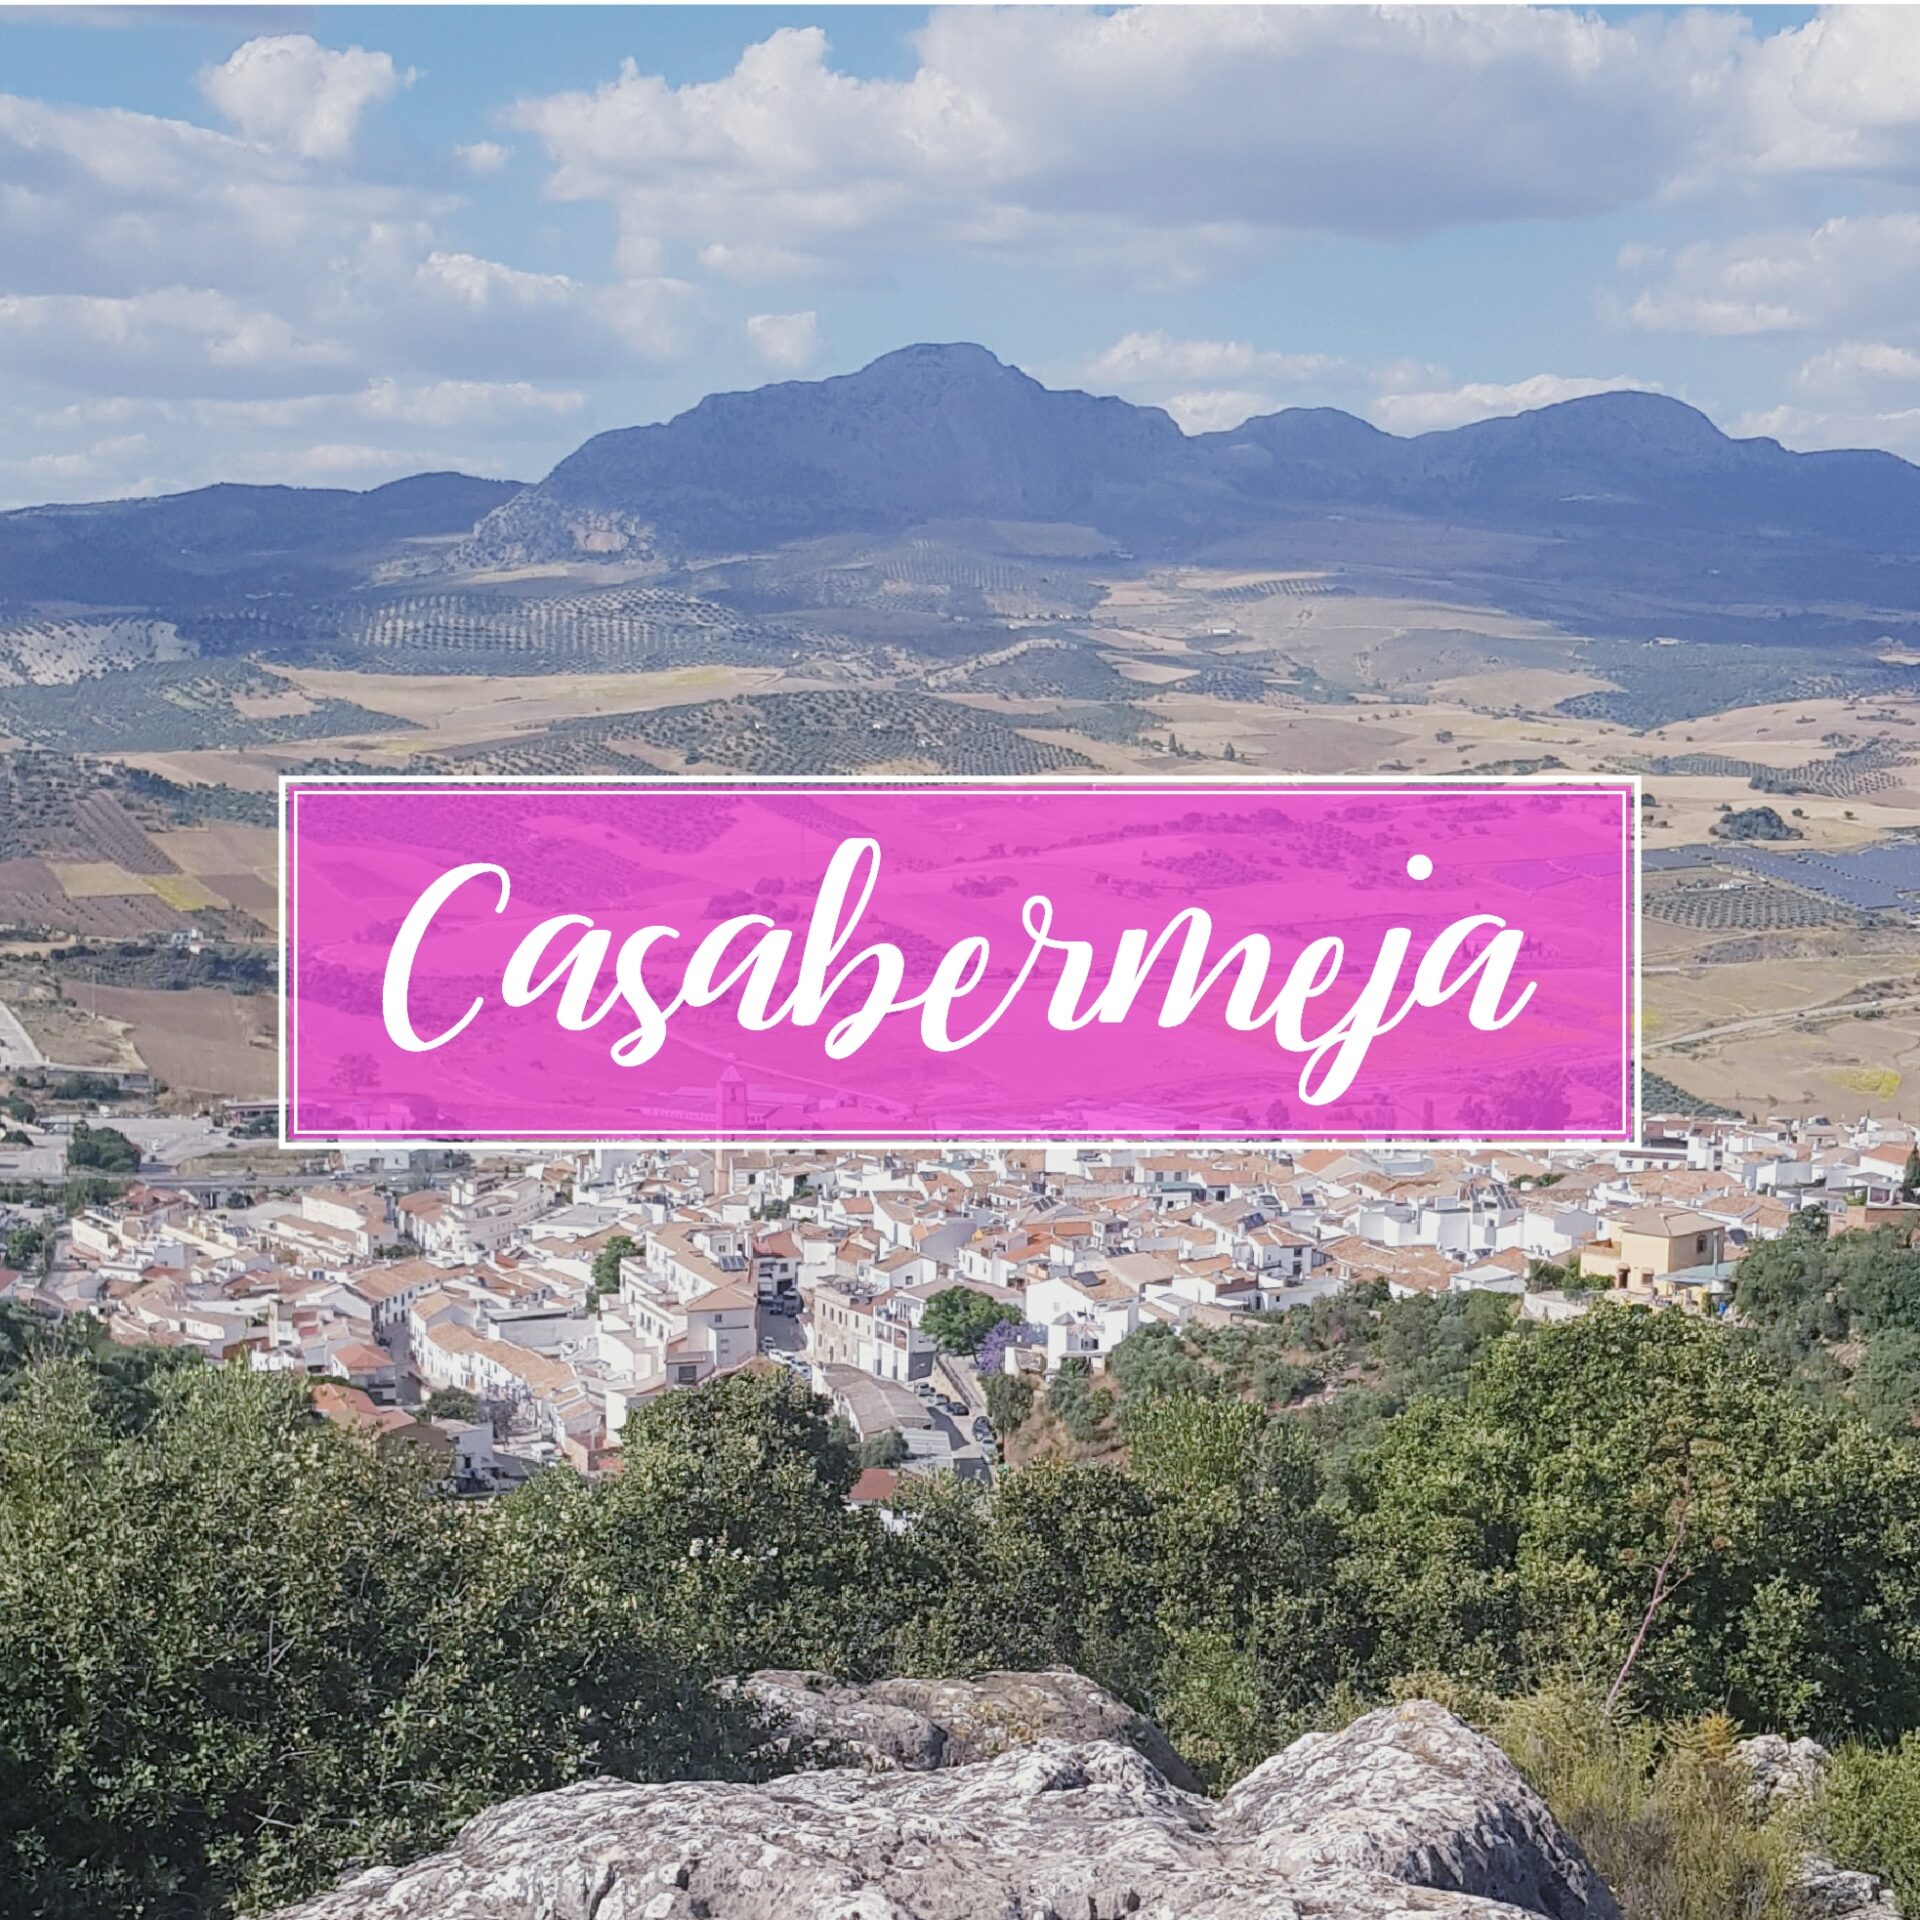 Casabermeja Pueblo Malaga